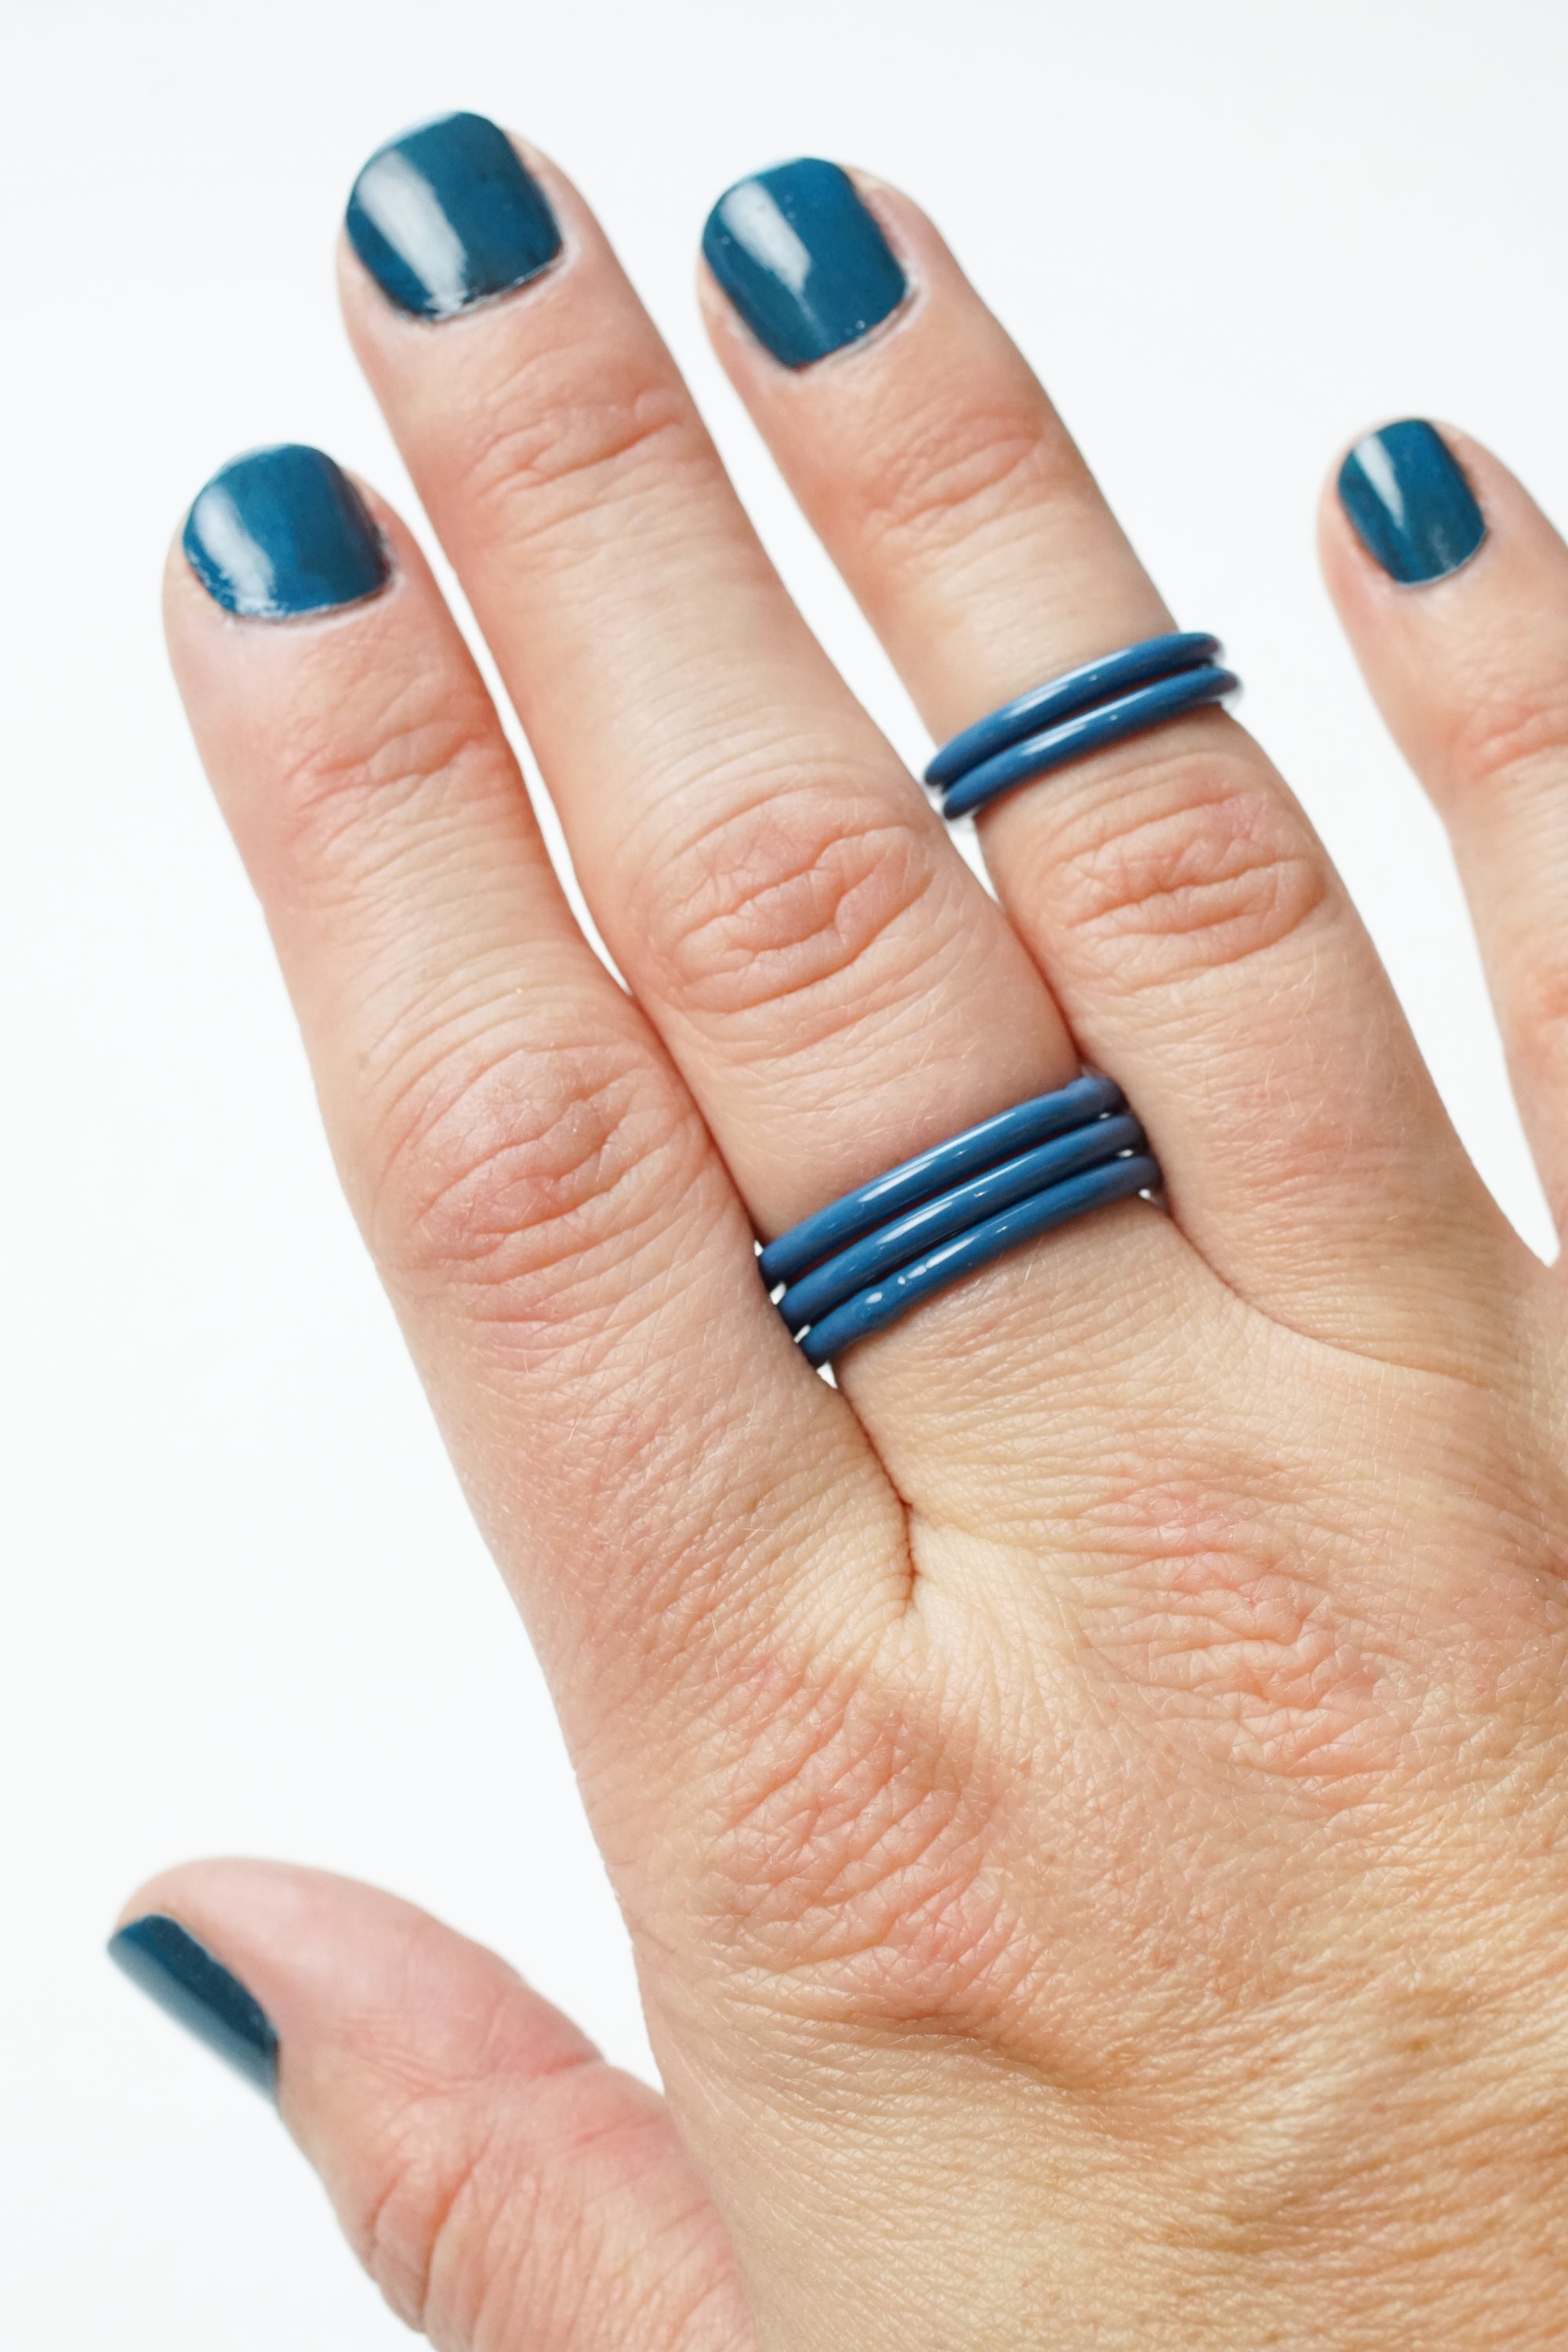 hand wearing azure blue stacking rings and matching nail polish